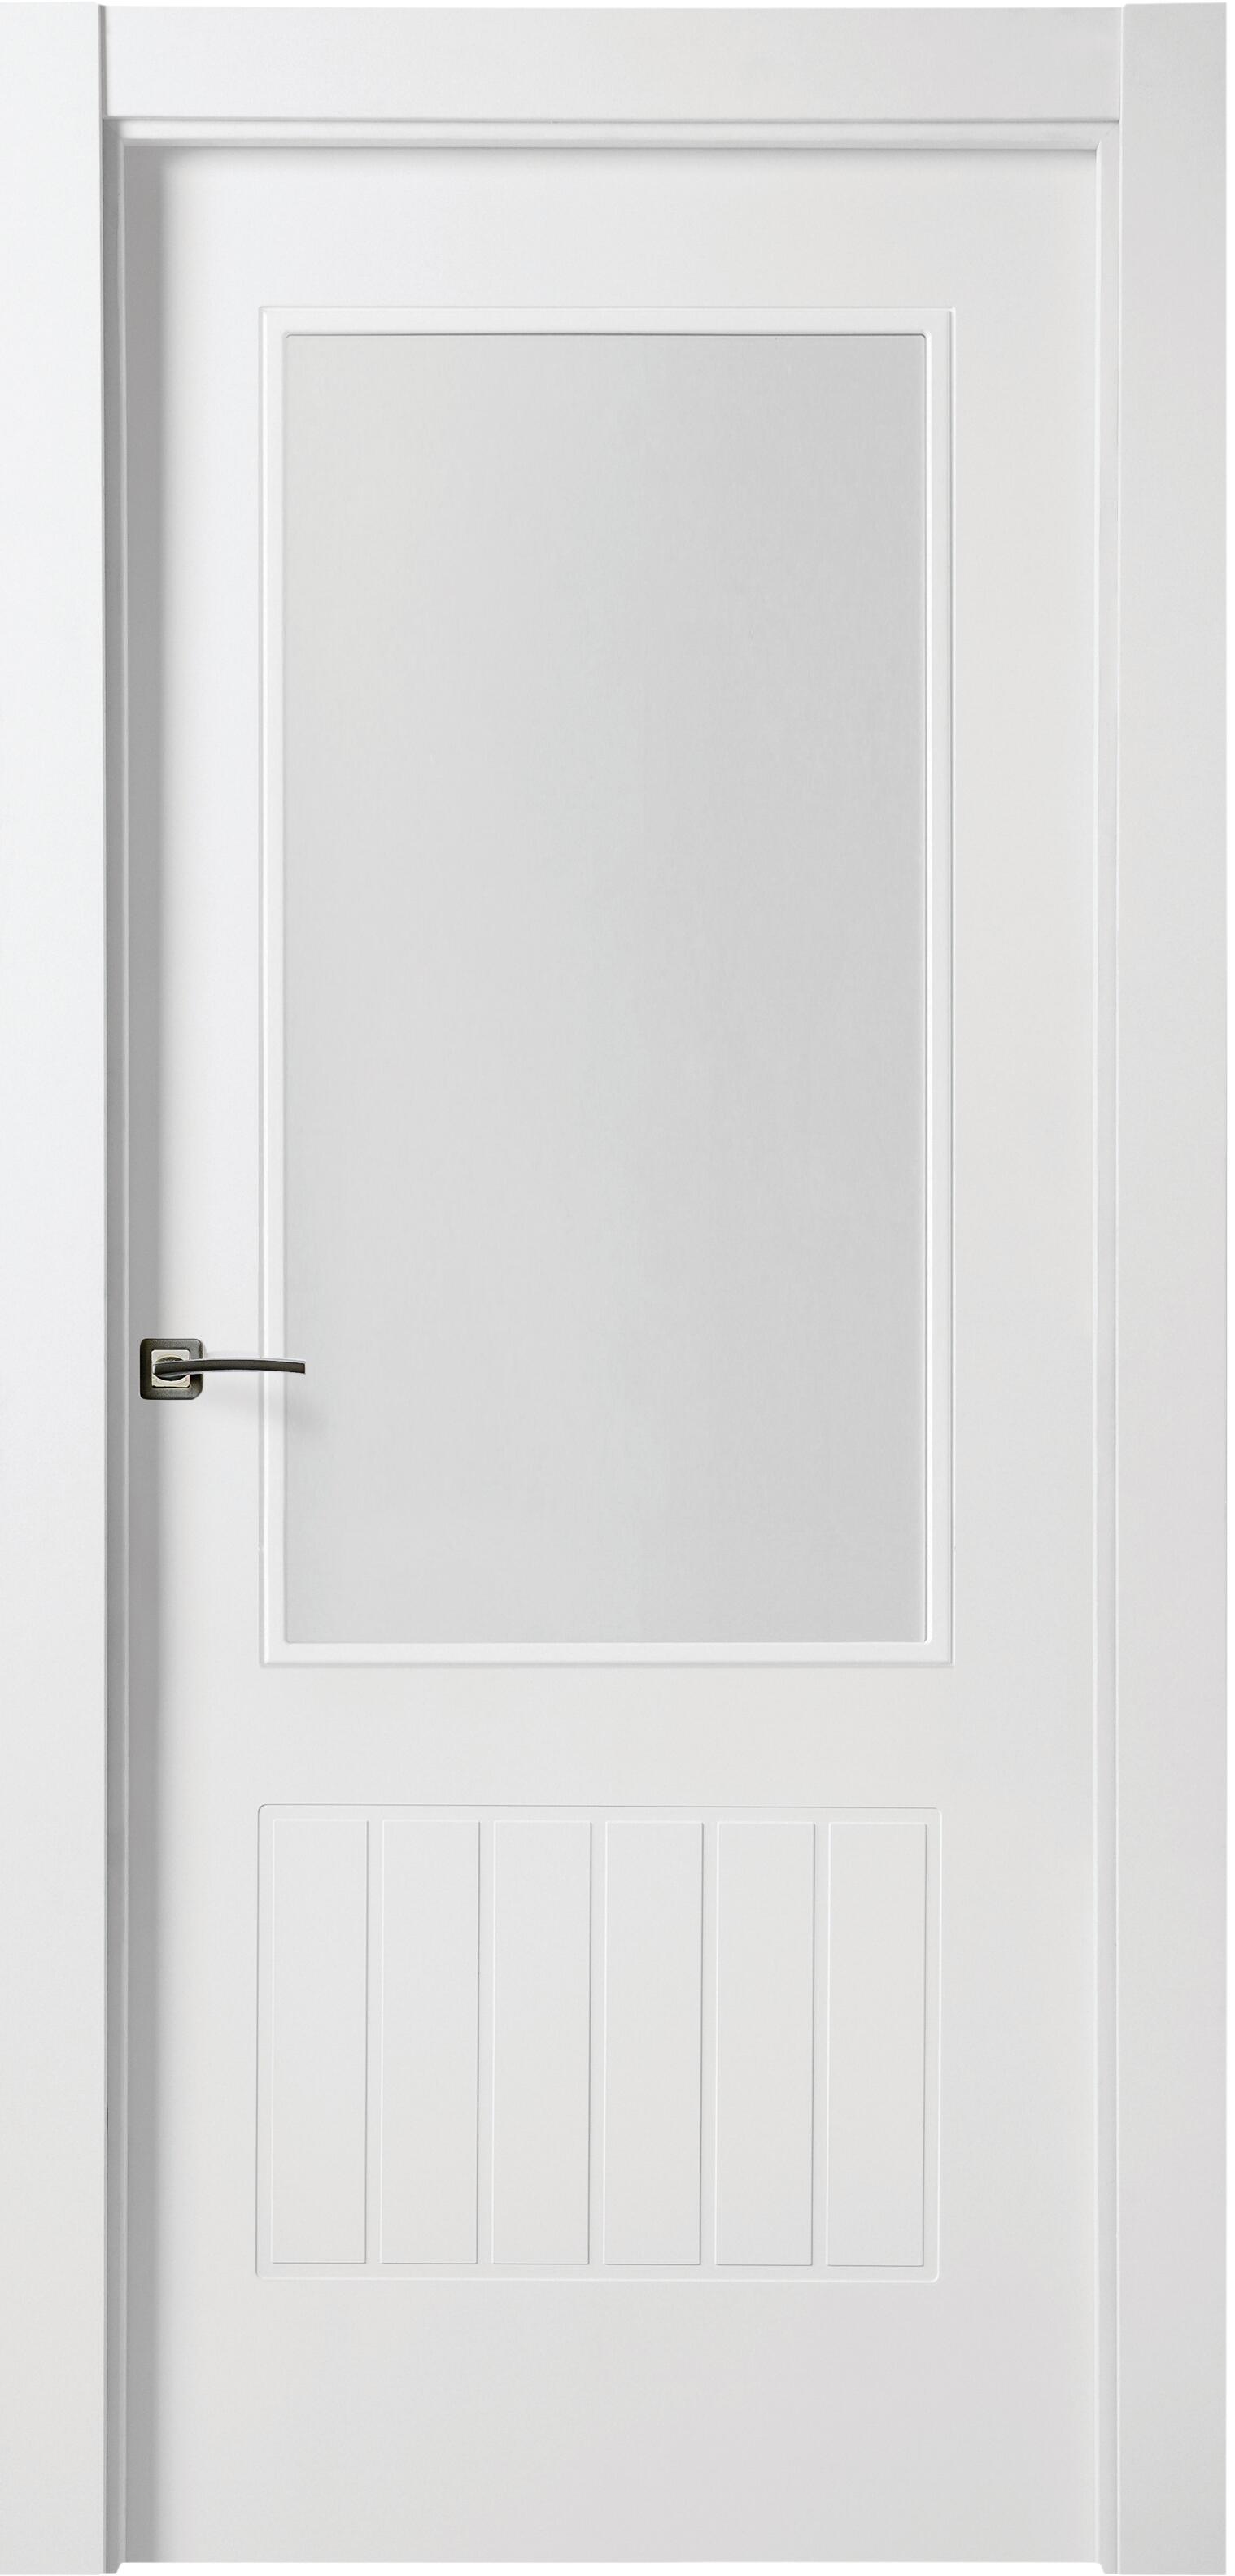 Puerta madison plus blanco apertura derecha con cristal de 11x 72.5 cm